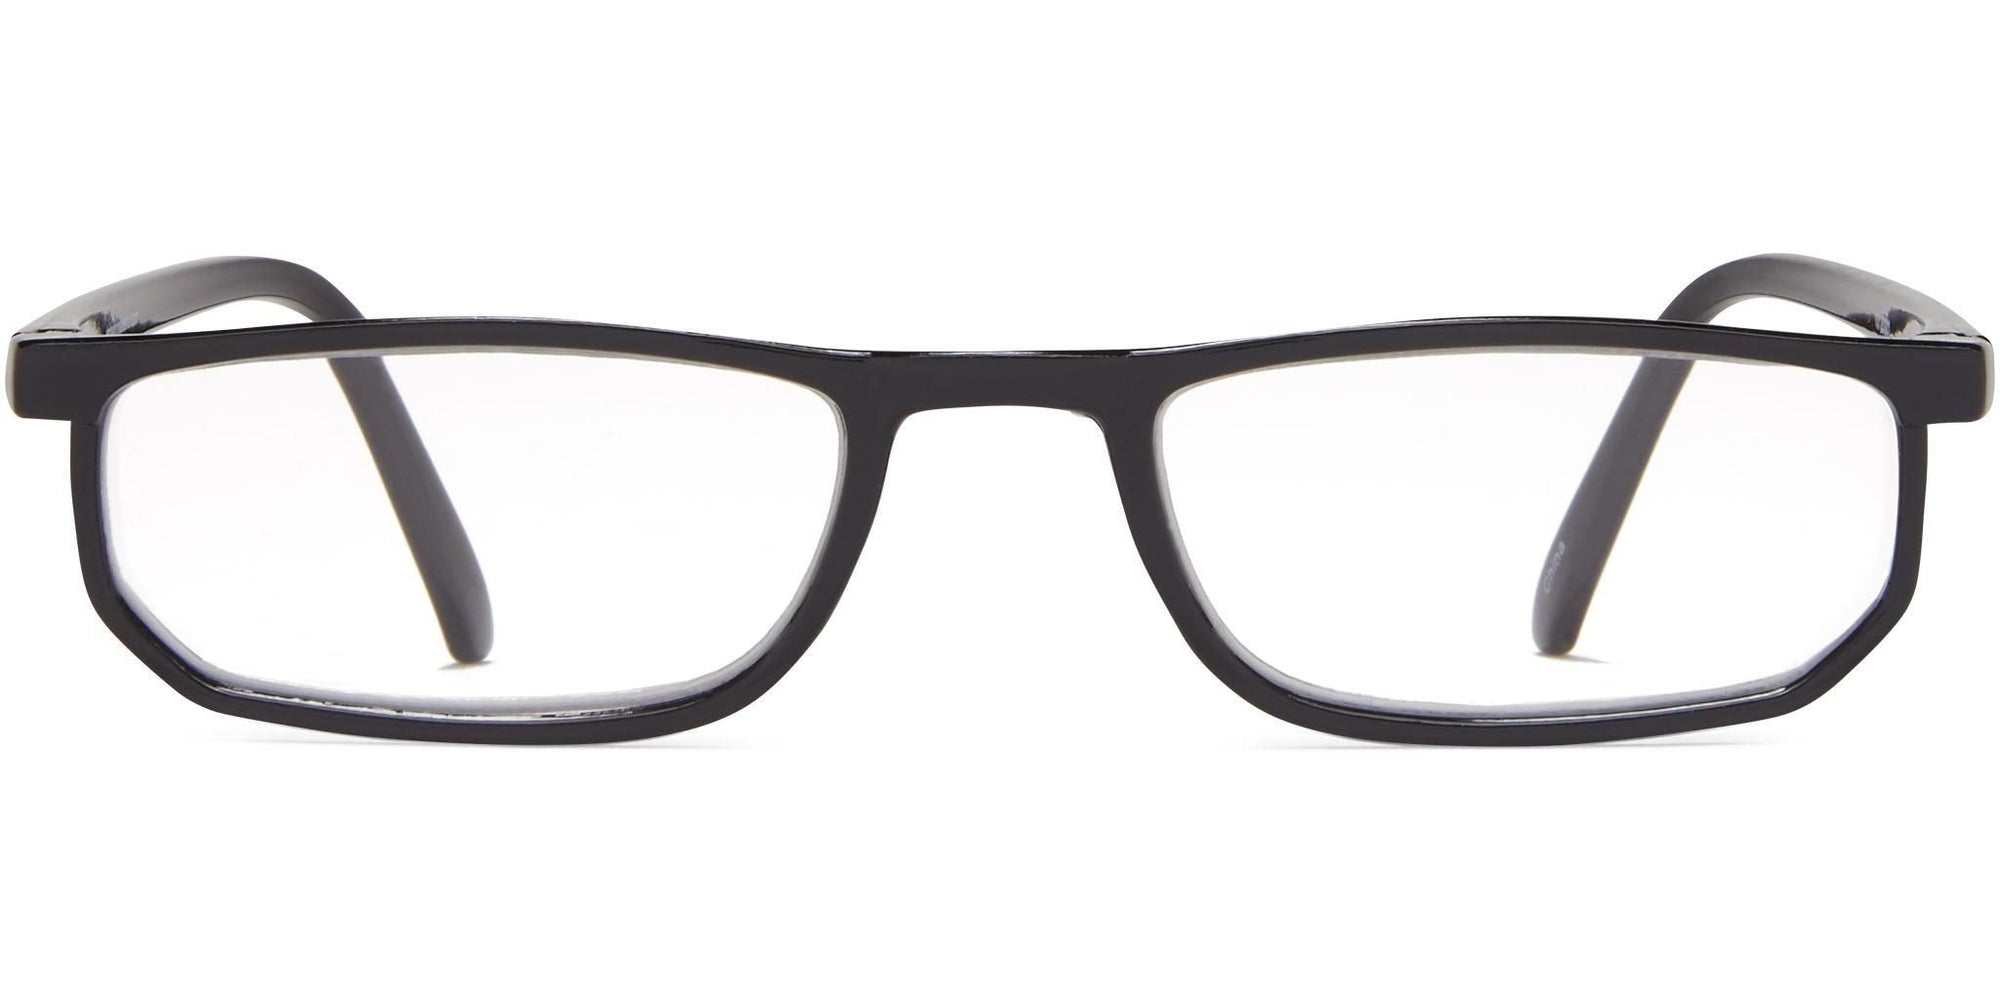 Richmond - Black / 1.25 - Reading Glasses